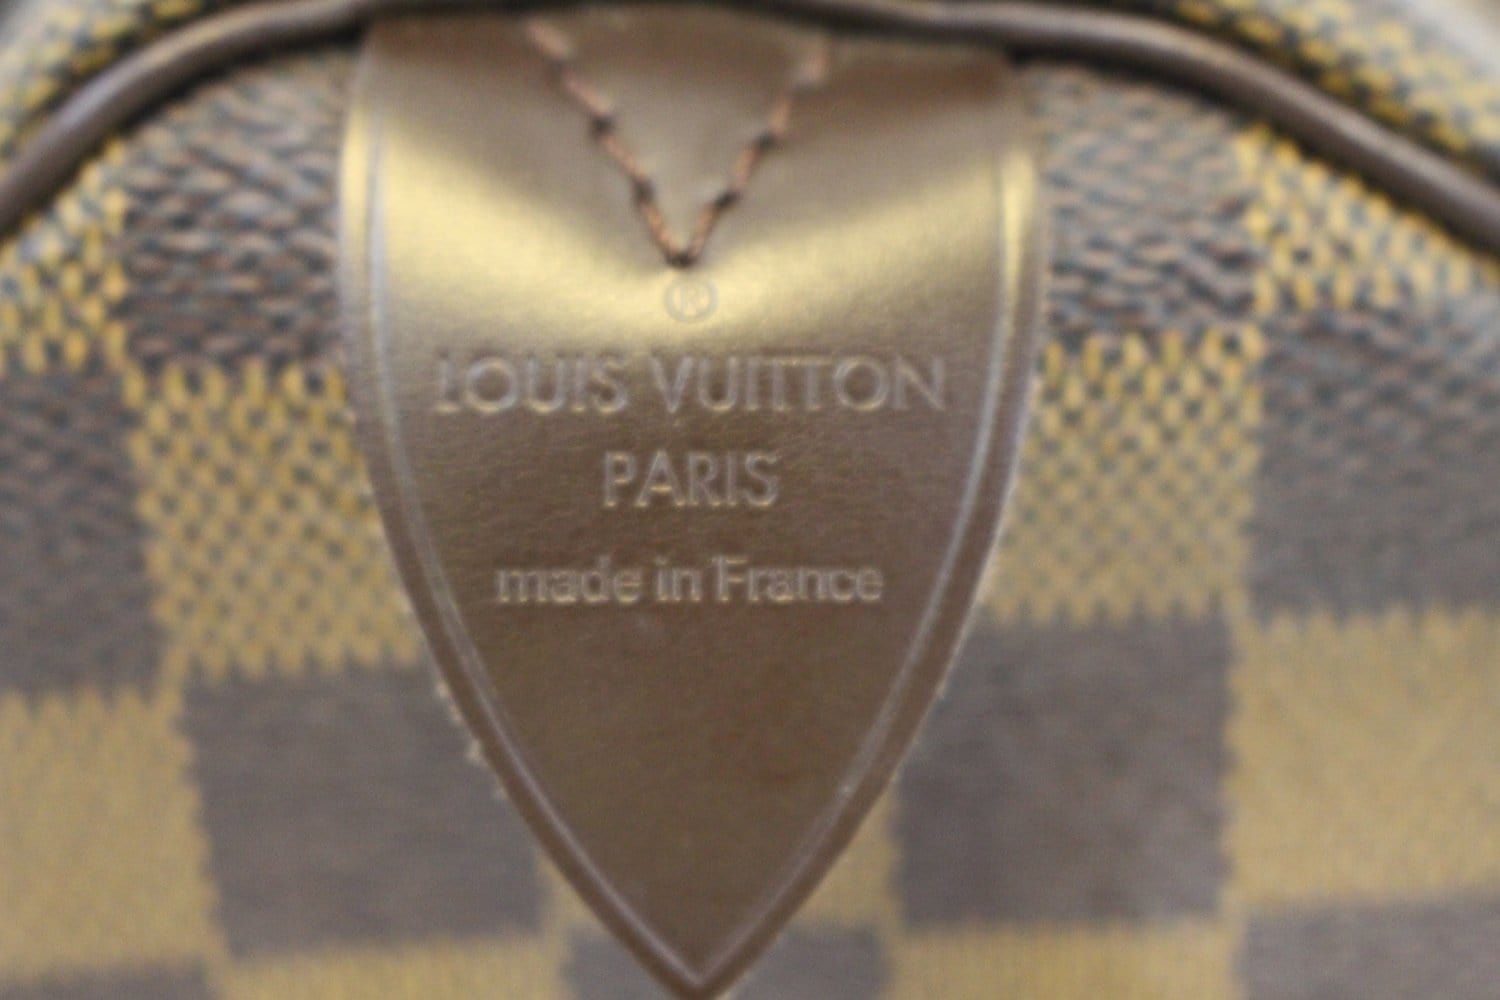 Louis Vuitton Speedy 25 - Damier Ebene – Chicago Pawners & Jewelers